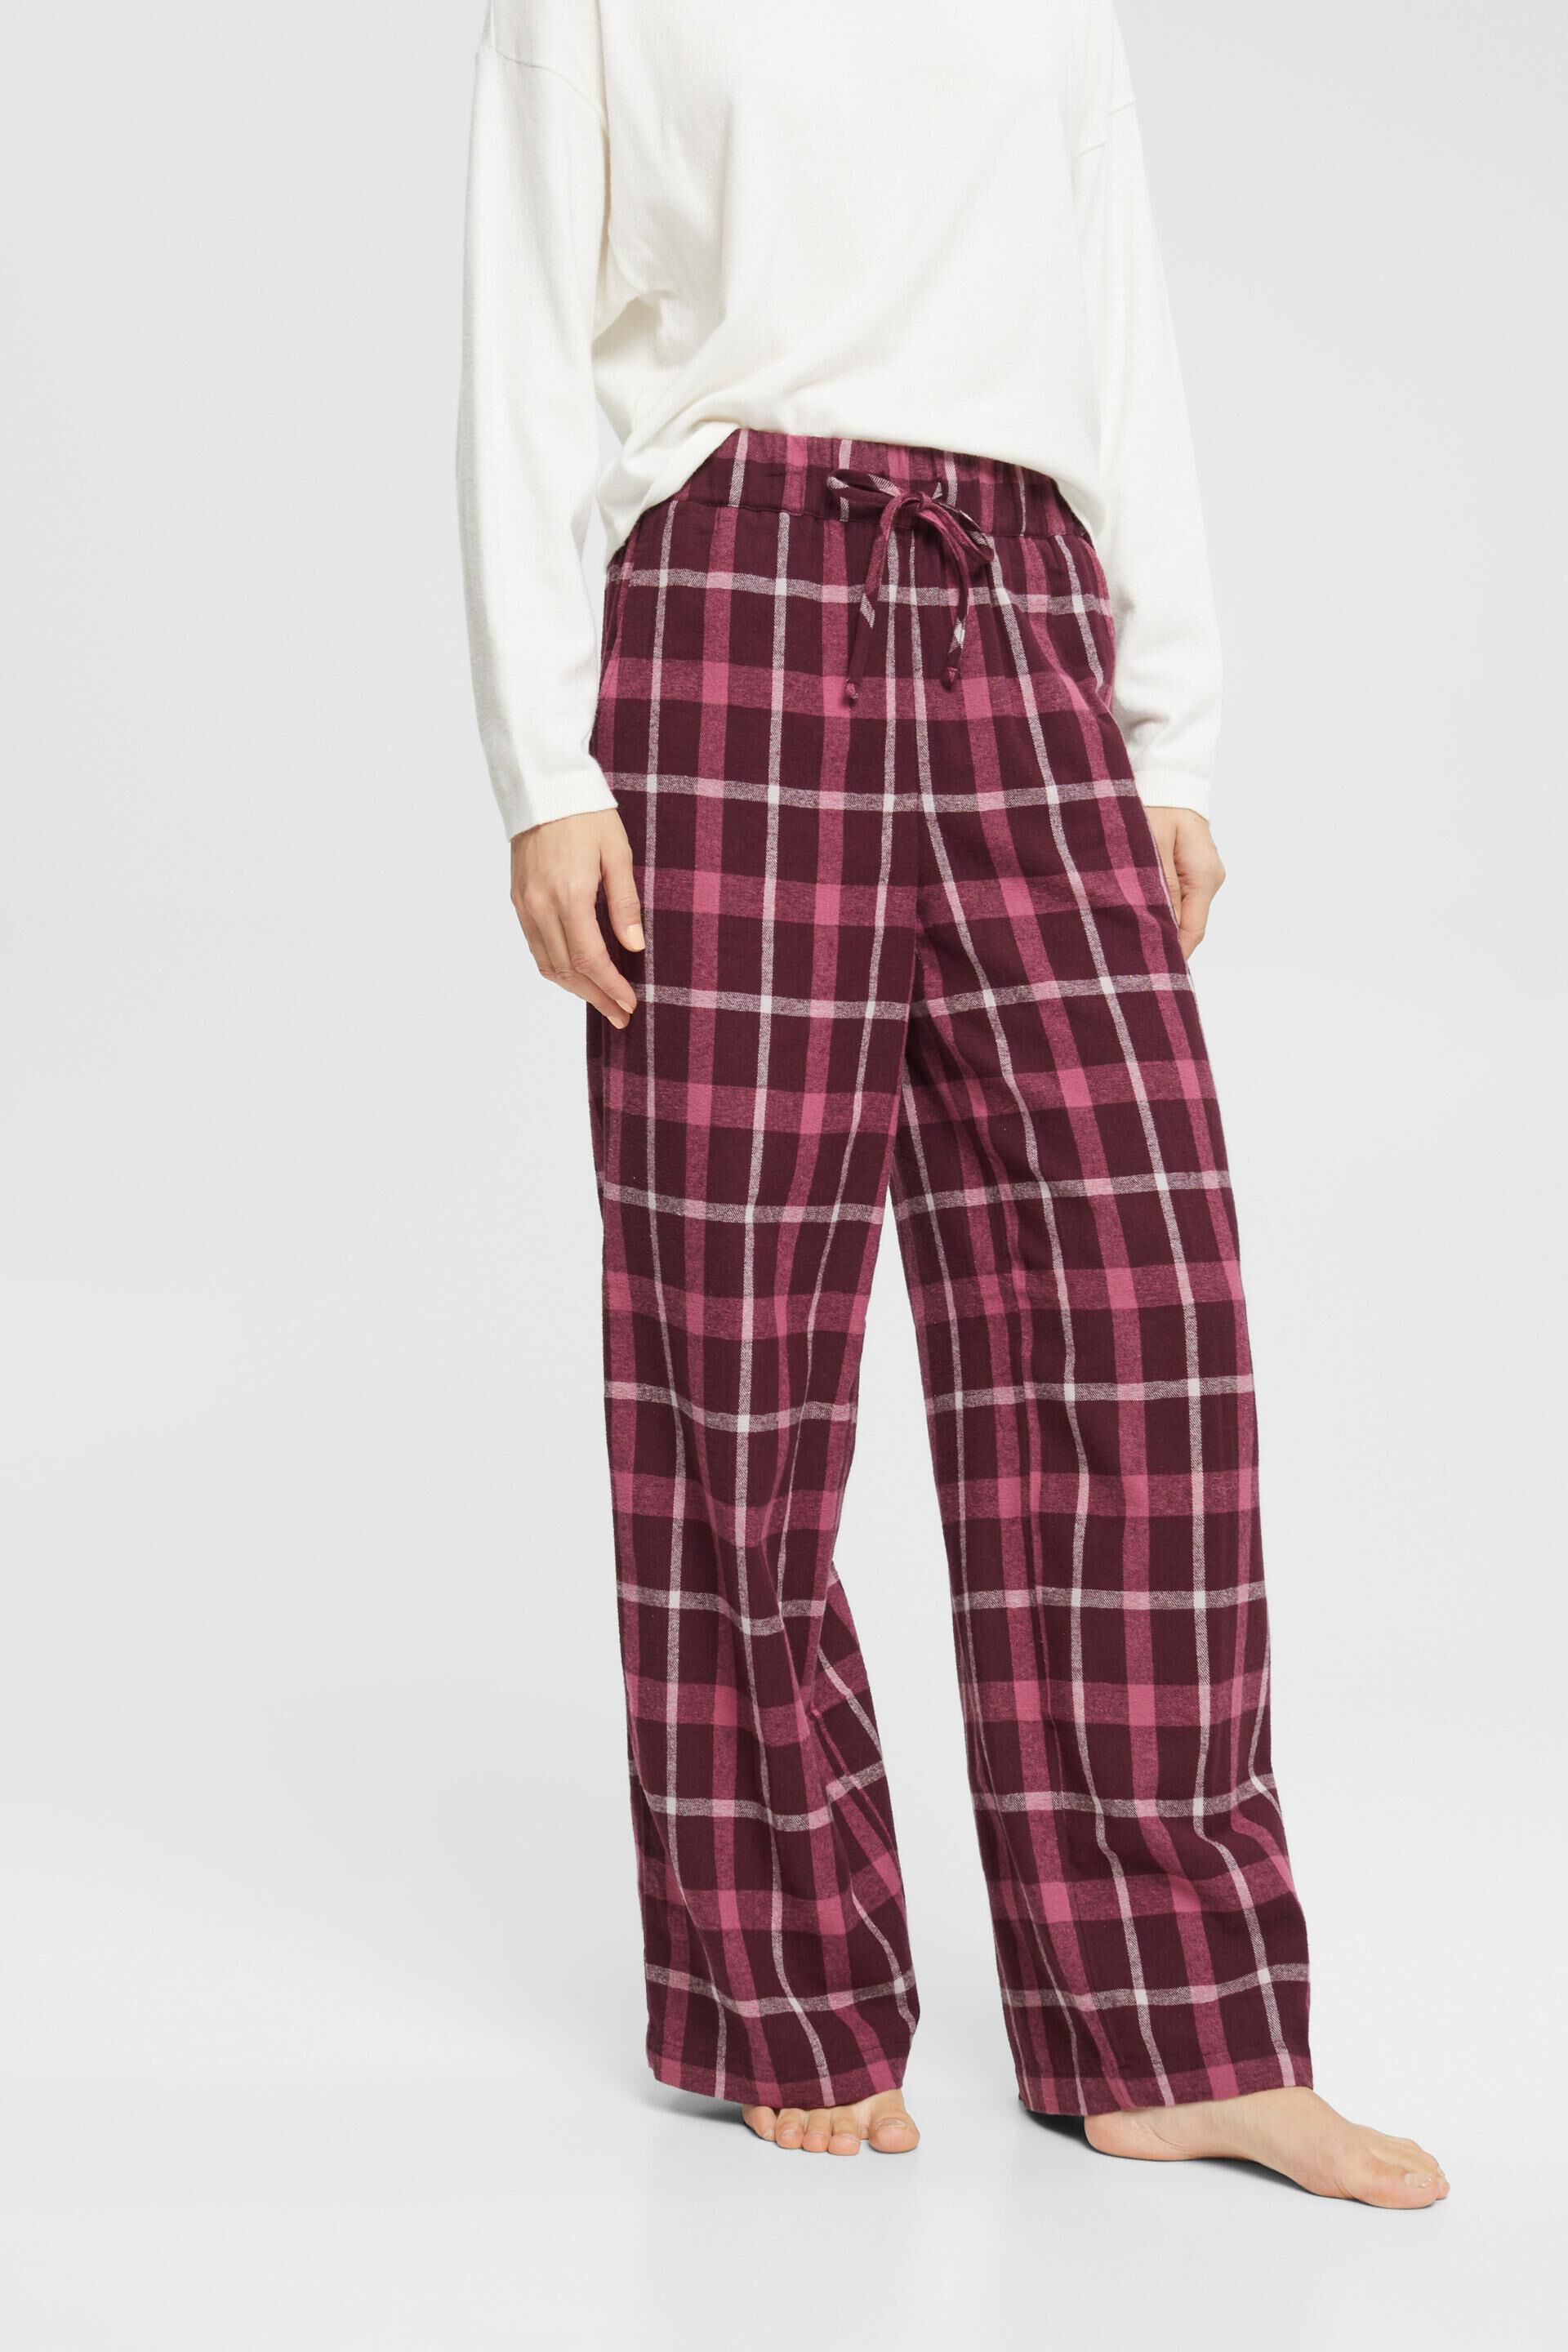 44 Femme Cherry Red 3 EspritEsprit Pantalon Long en Flanelle Check Nw Bci Bas de Pyjama Marque  